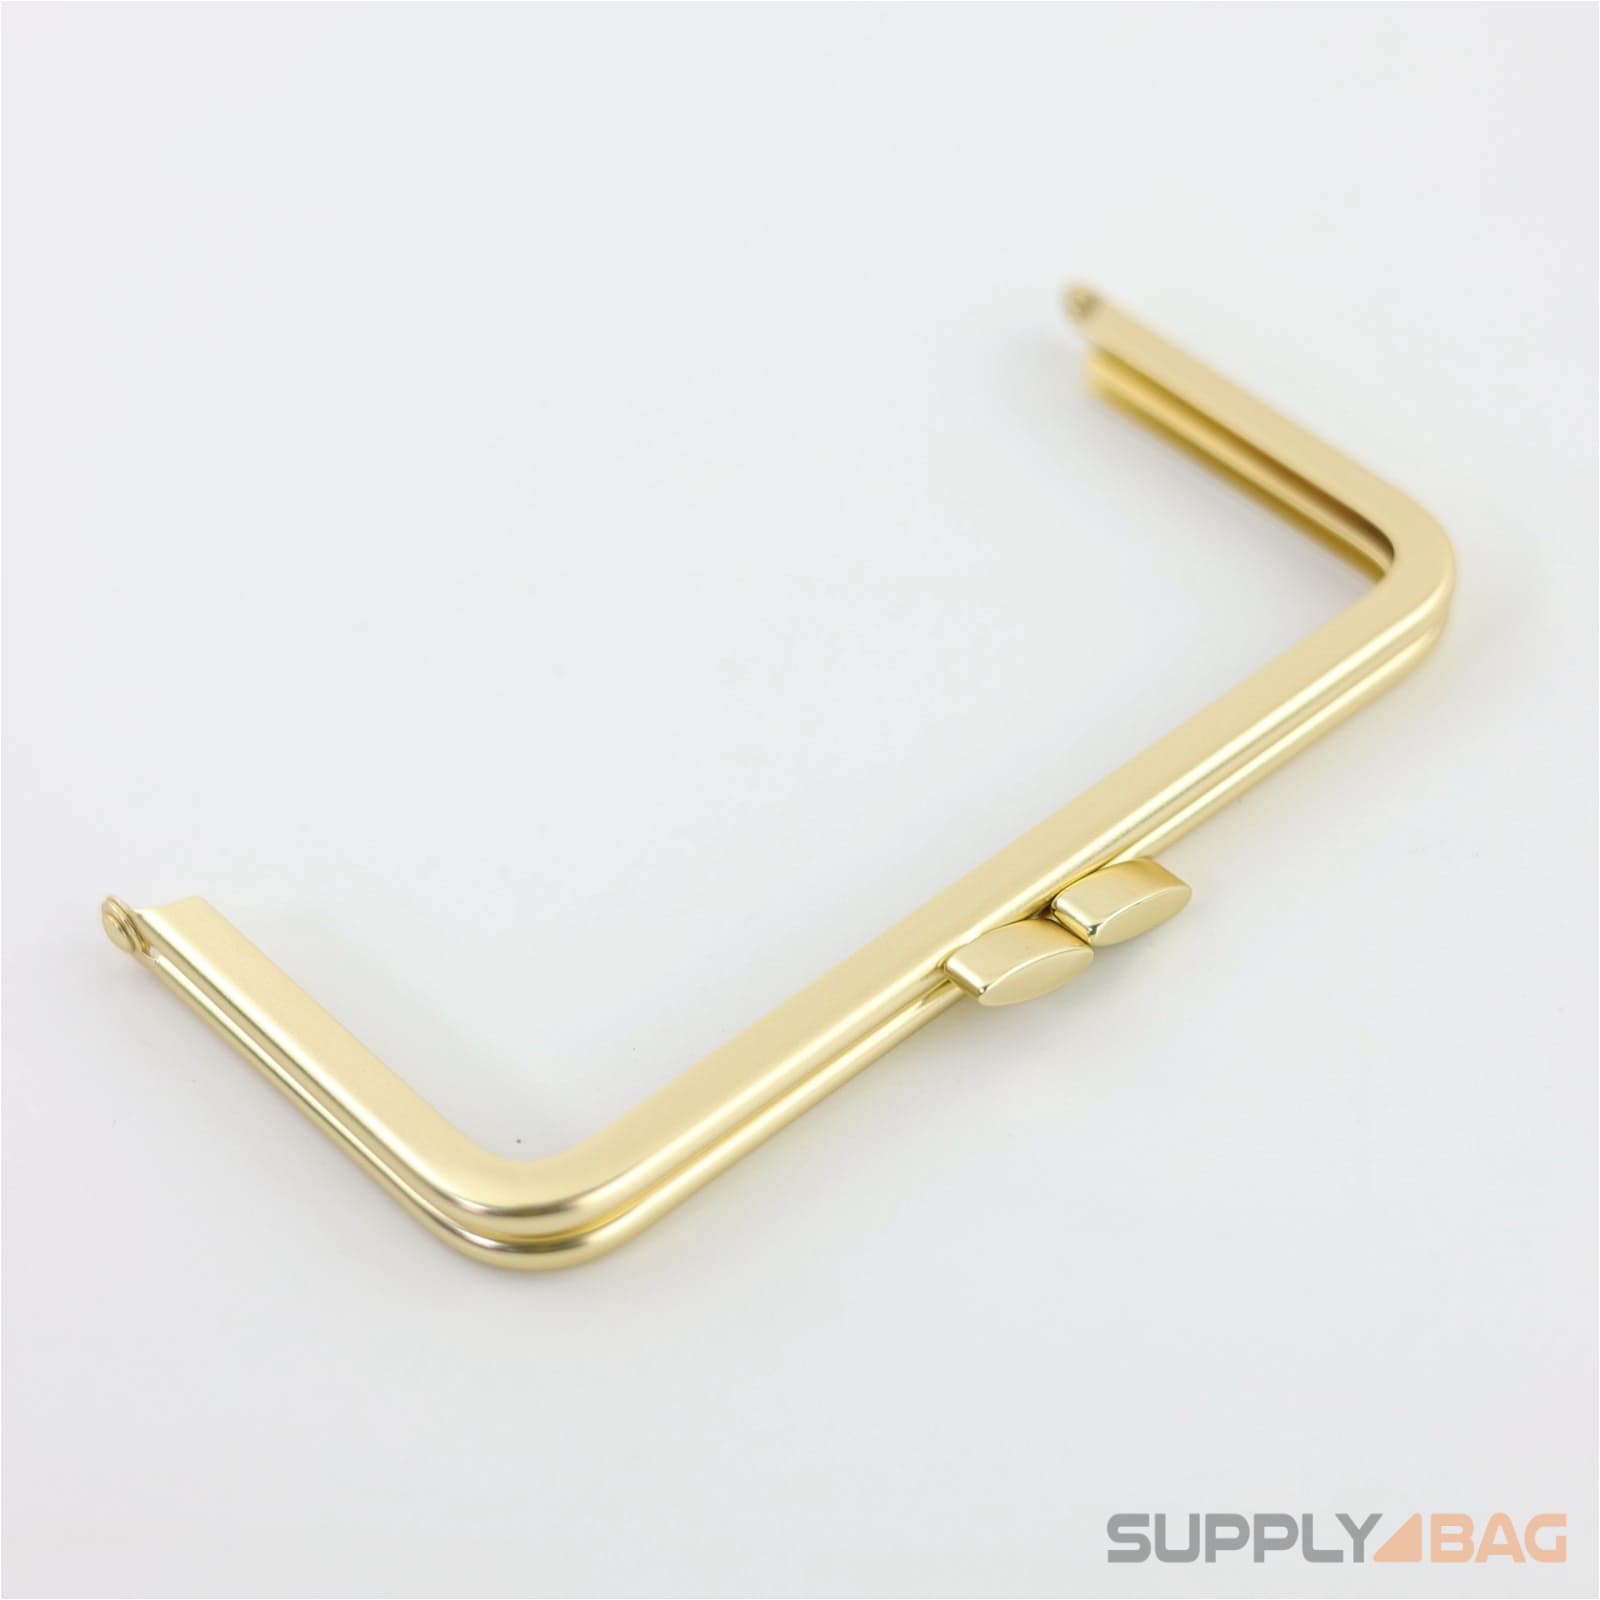 5 3/8 x 2 3/4 inch - matte gold metal purse frame